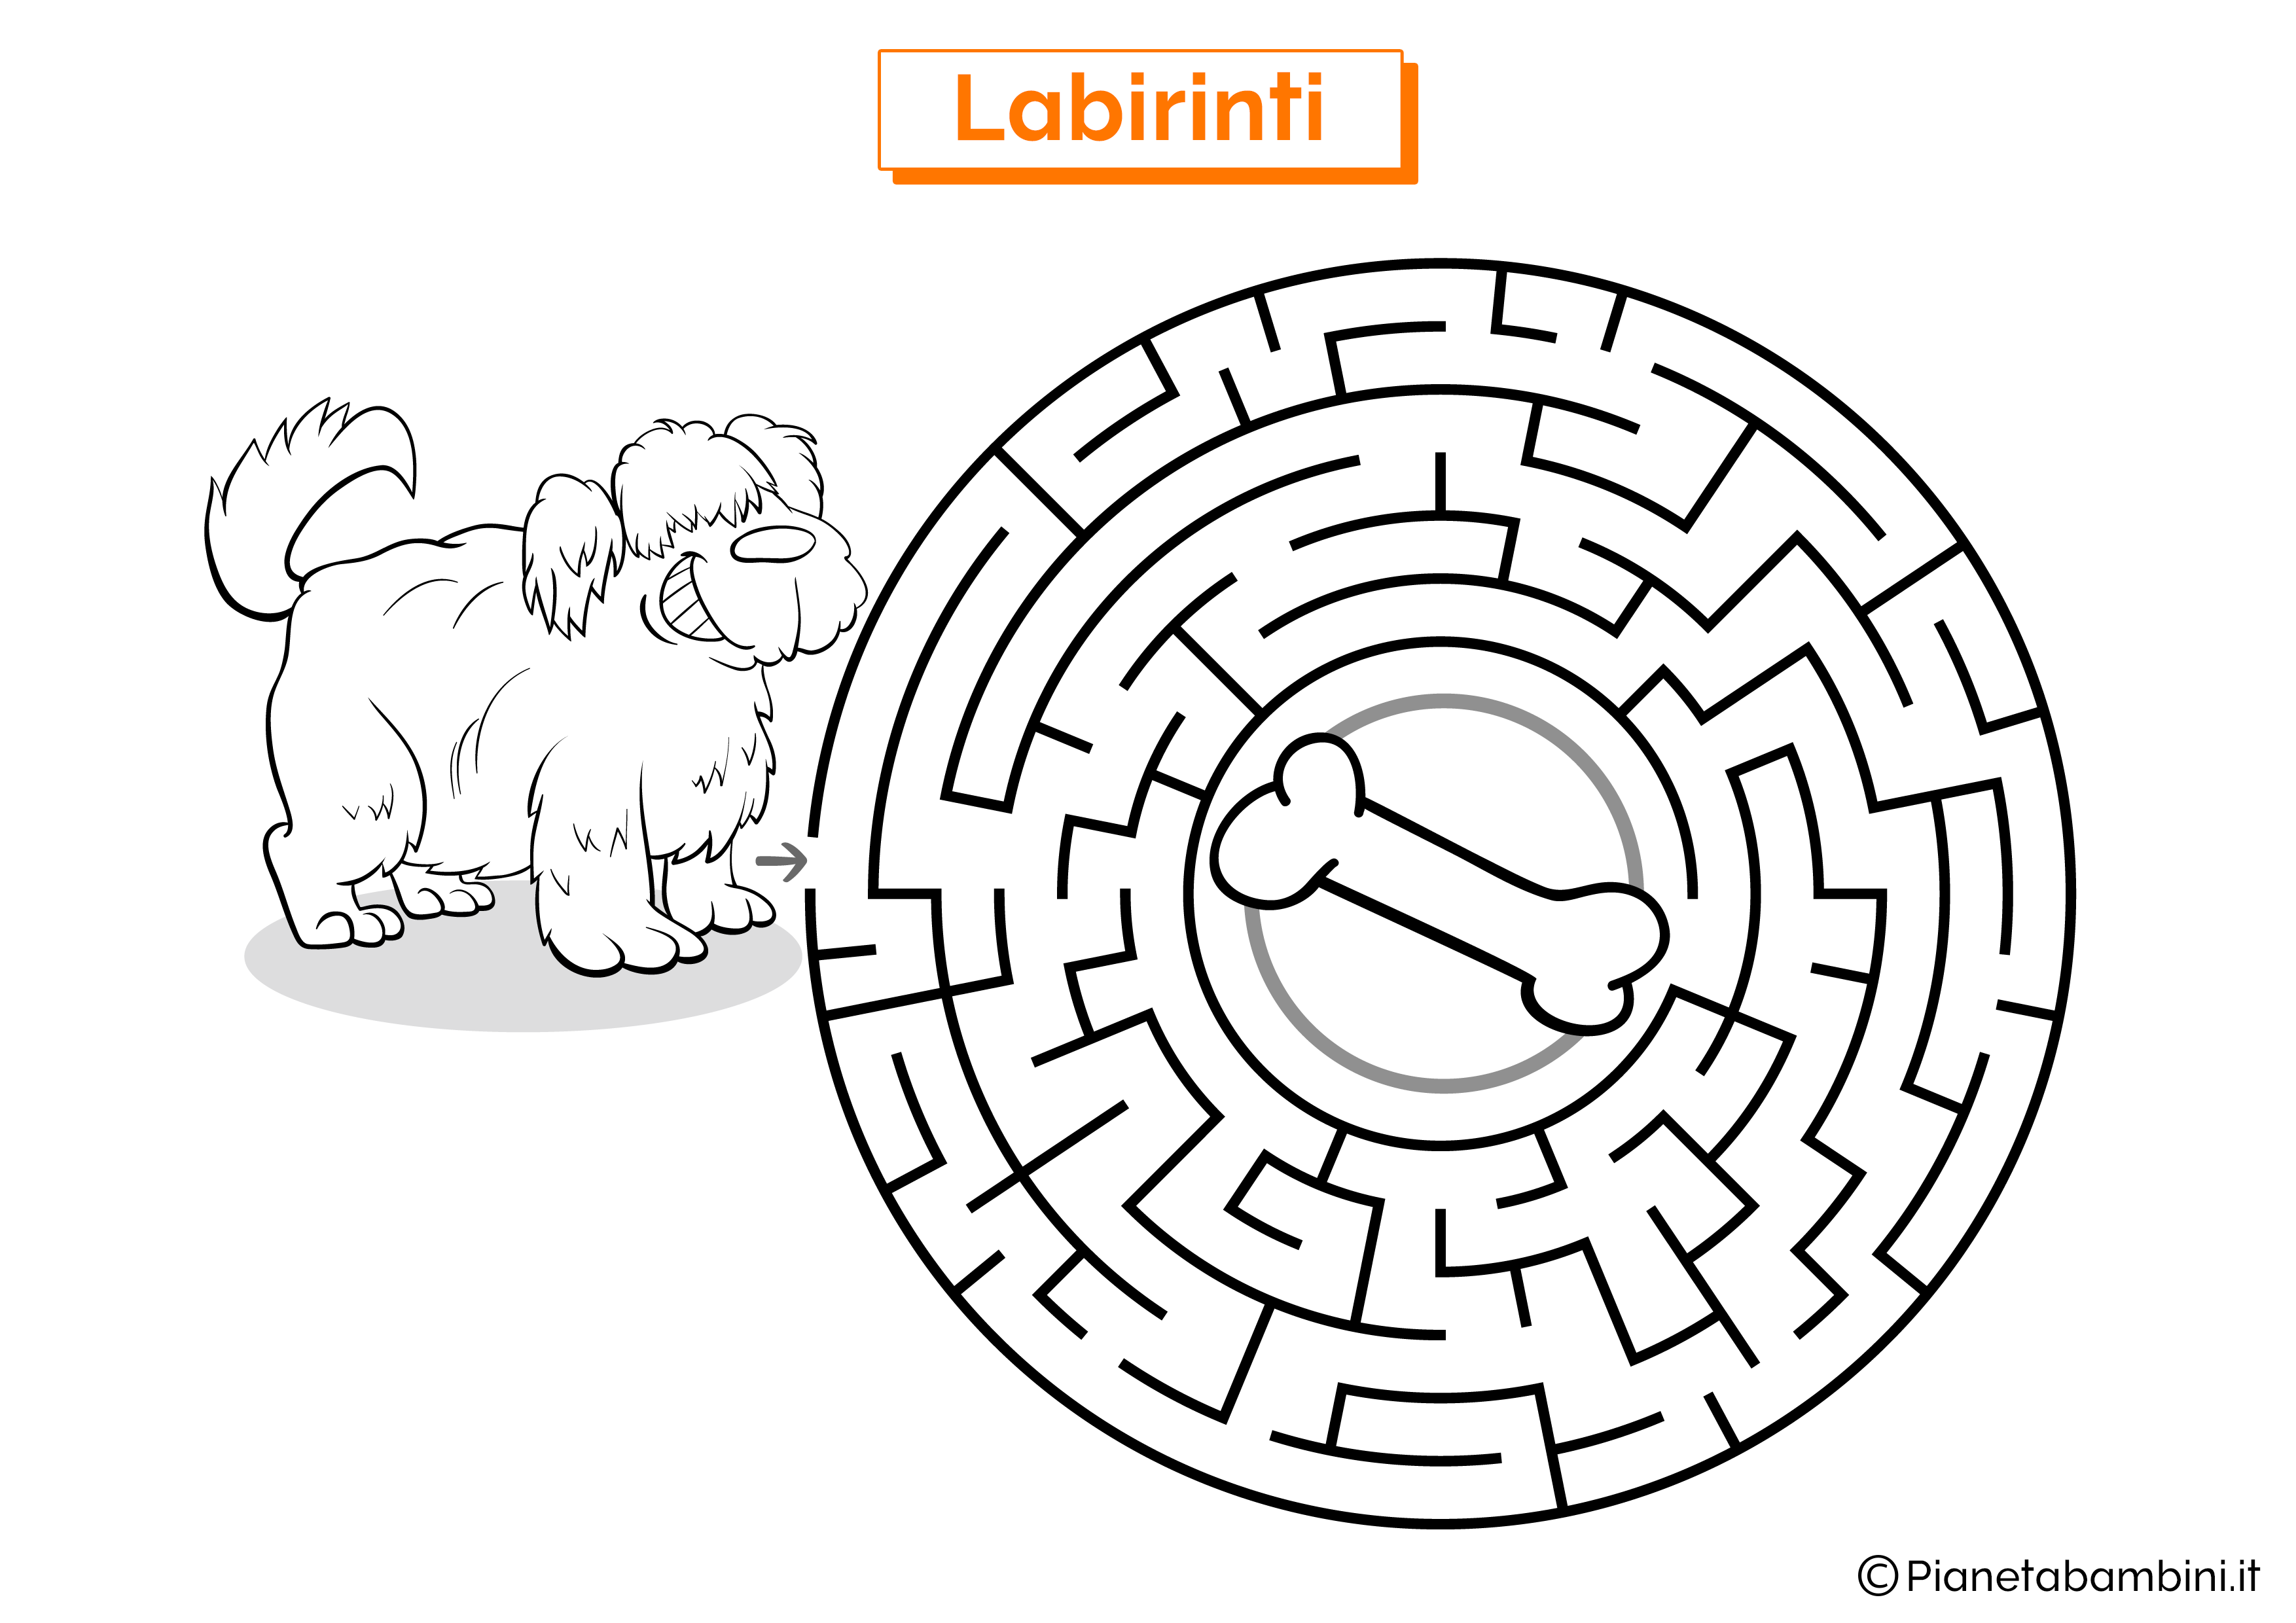 Labirinto con cane e osso da stampare